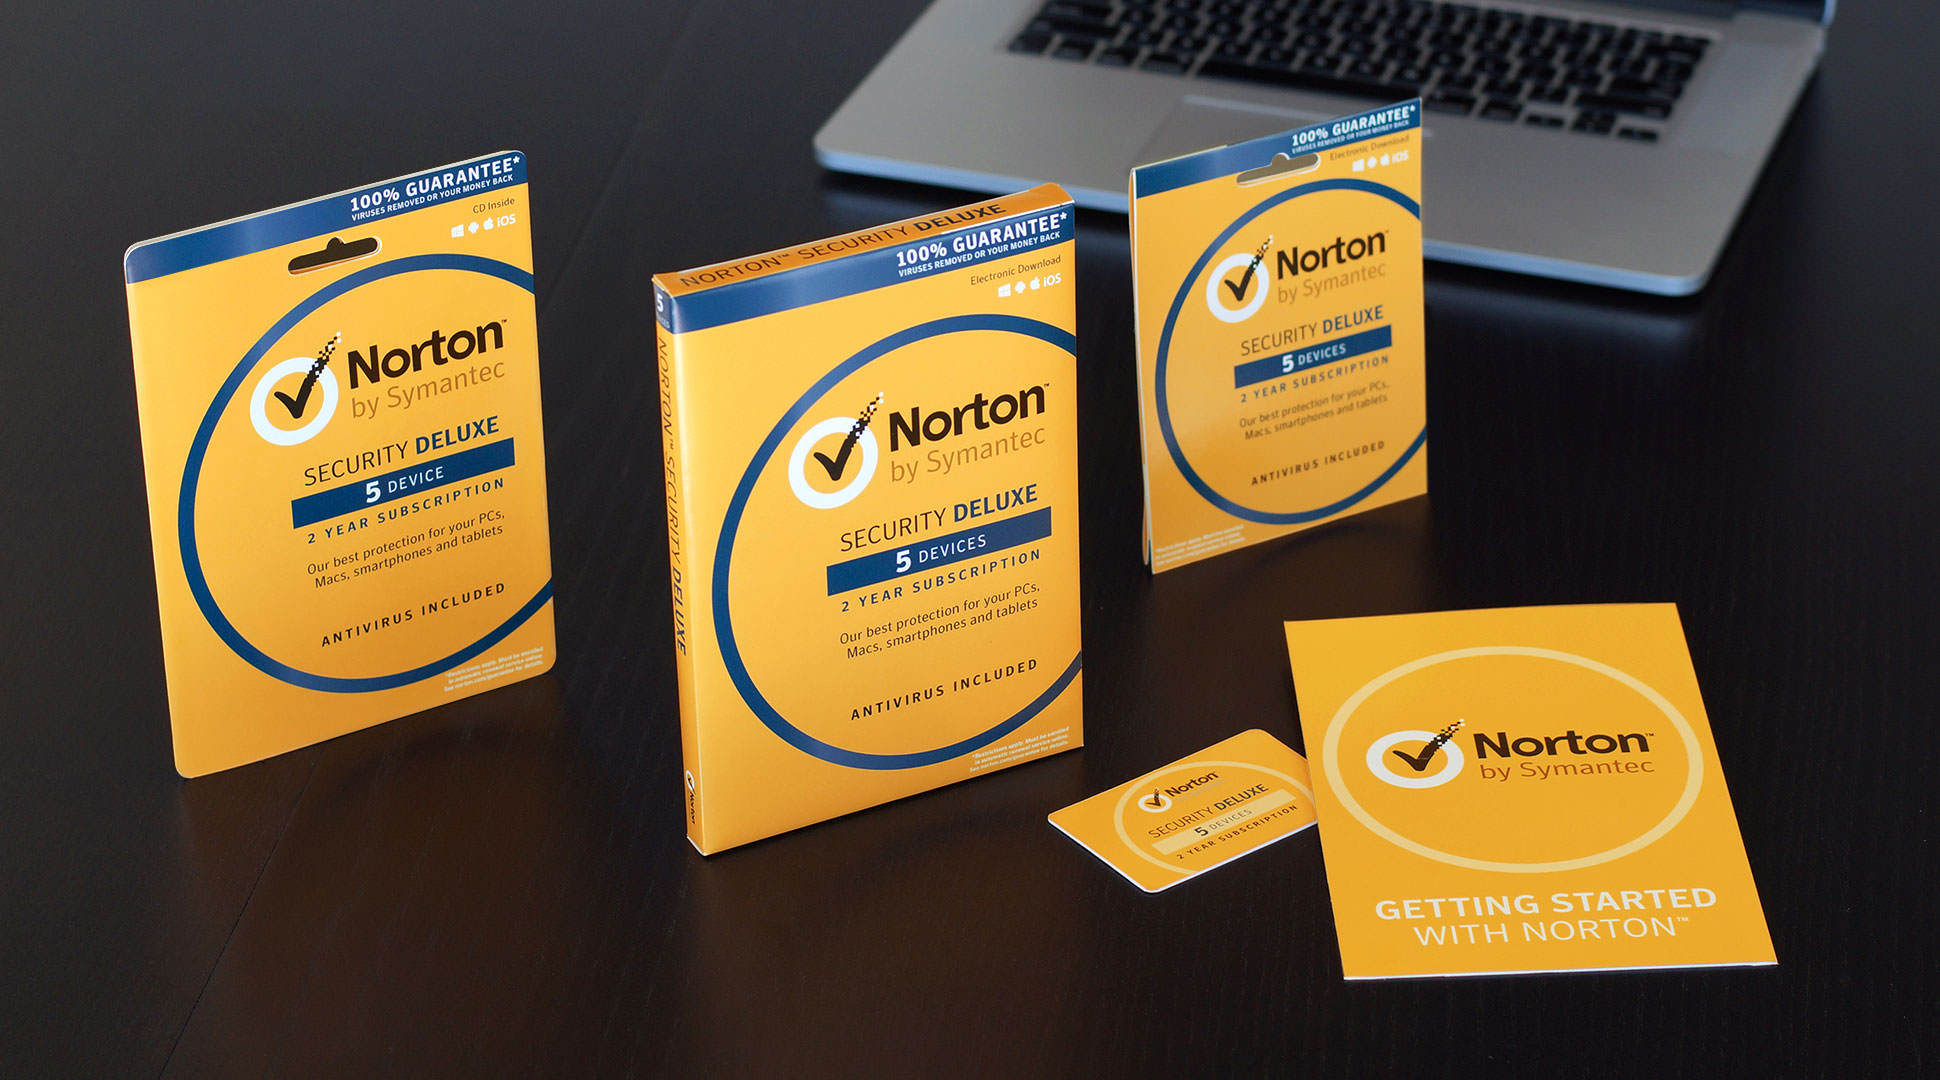 Buy Software: Norton Security Deluxe 2020 PC